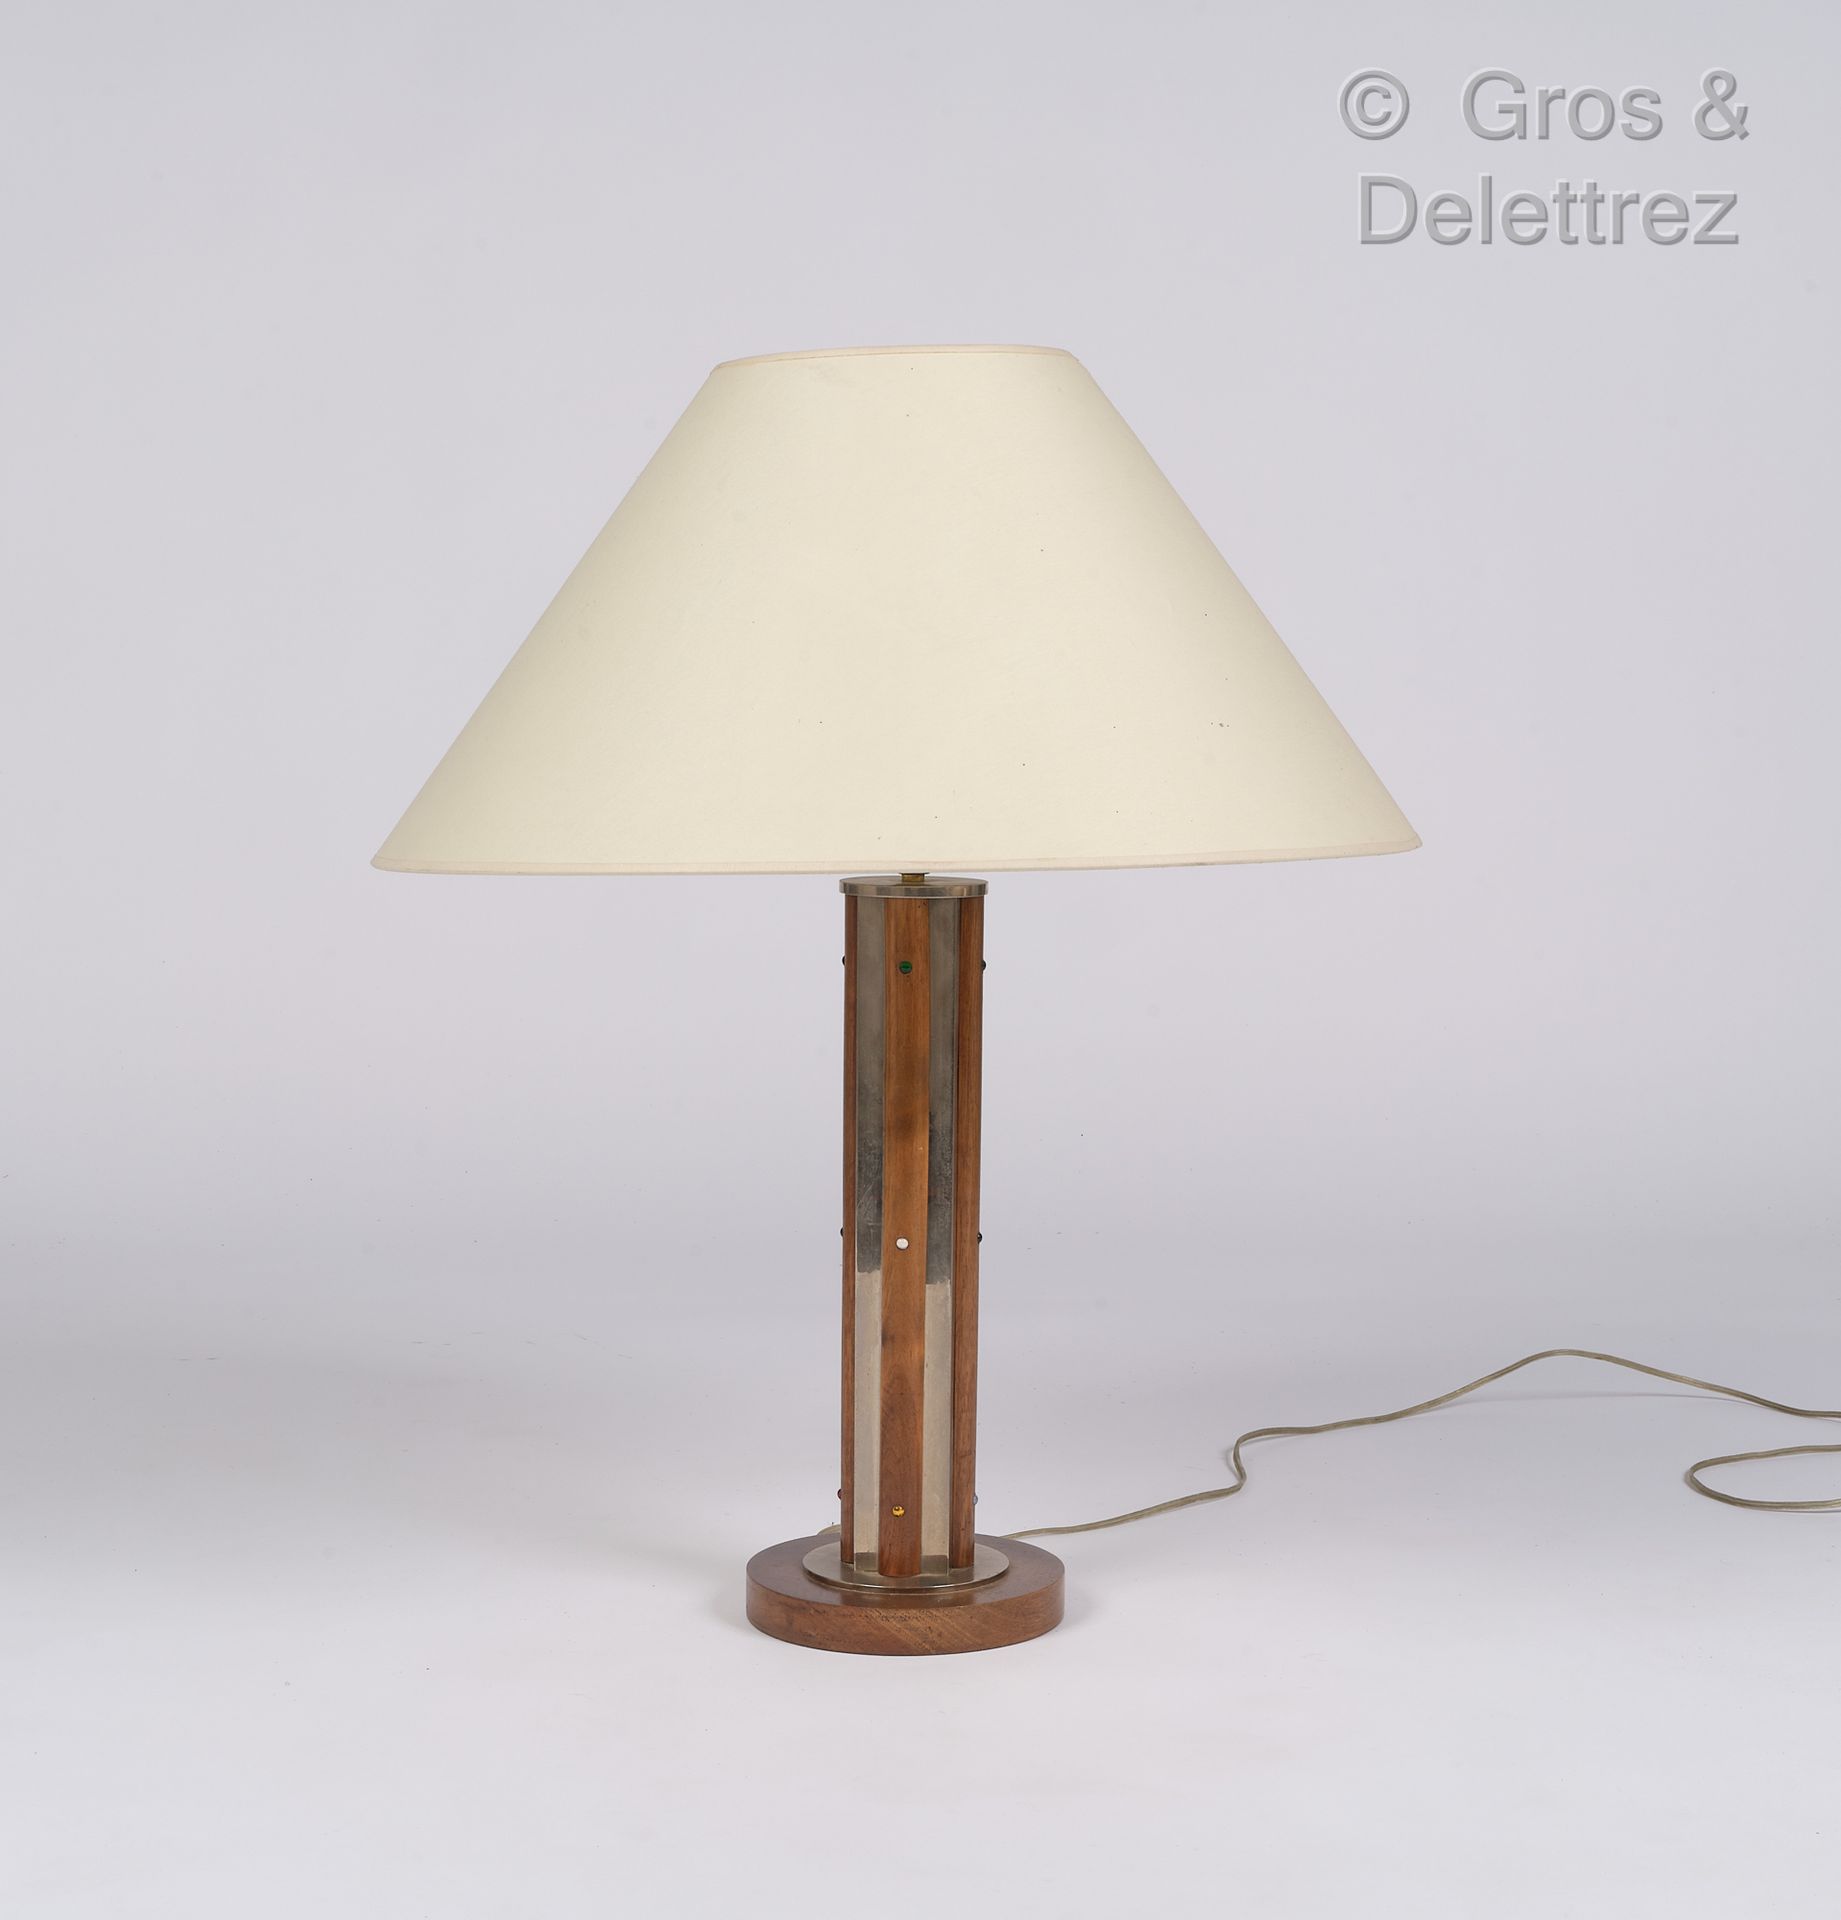 Null Modernist work

Desk lamp in wood and chromed metal

H : 49 cm